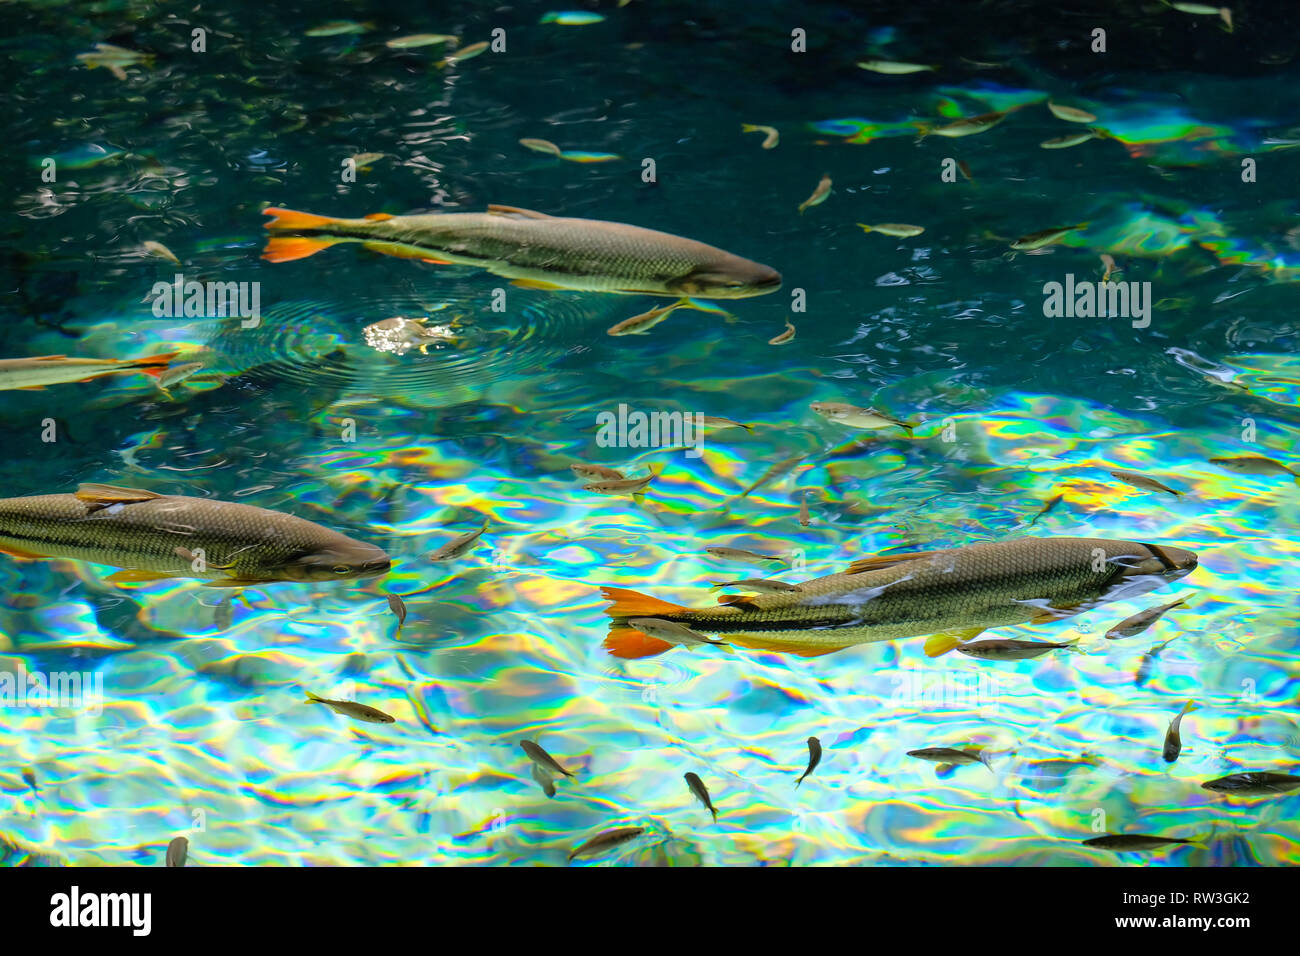 https://c8.alamy.com/comp/RW3GK2/brycon-hilarii-piraputanga-fishes-in-cristal-clear-water-of-the-salobra-river-bom-jardim-nobres-mato-grosso-brazil-RW3GK2.jpg